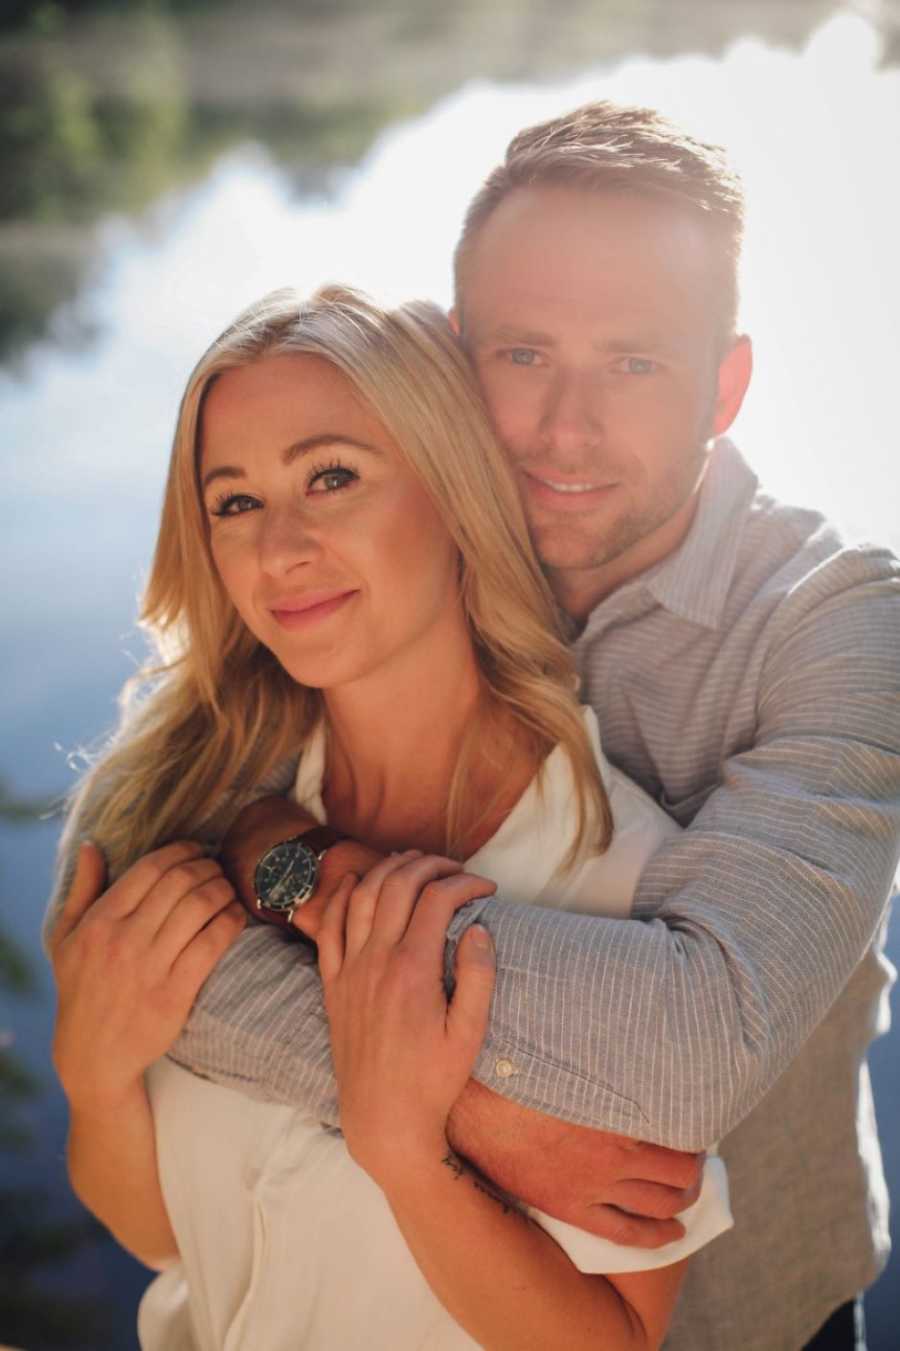 Widow hugs her new husband during an engagement photoshoot